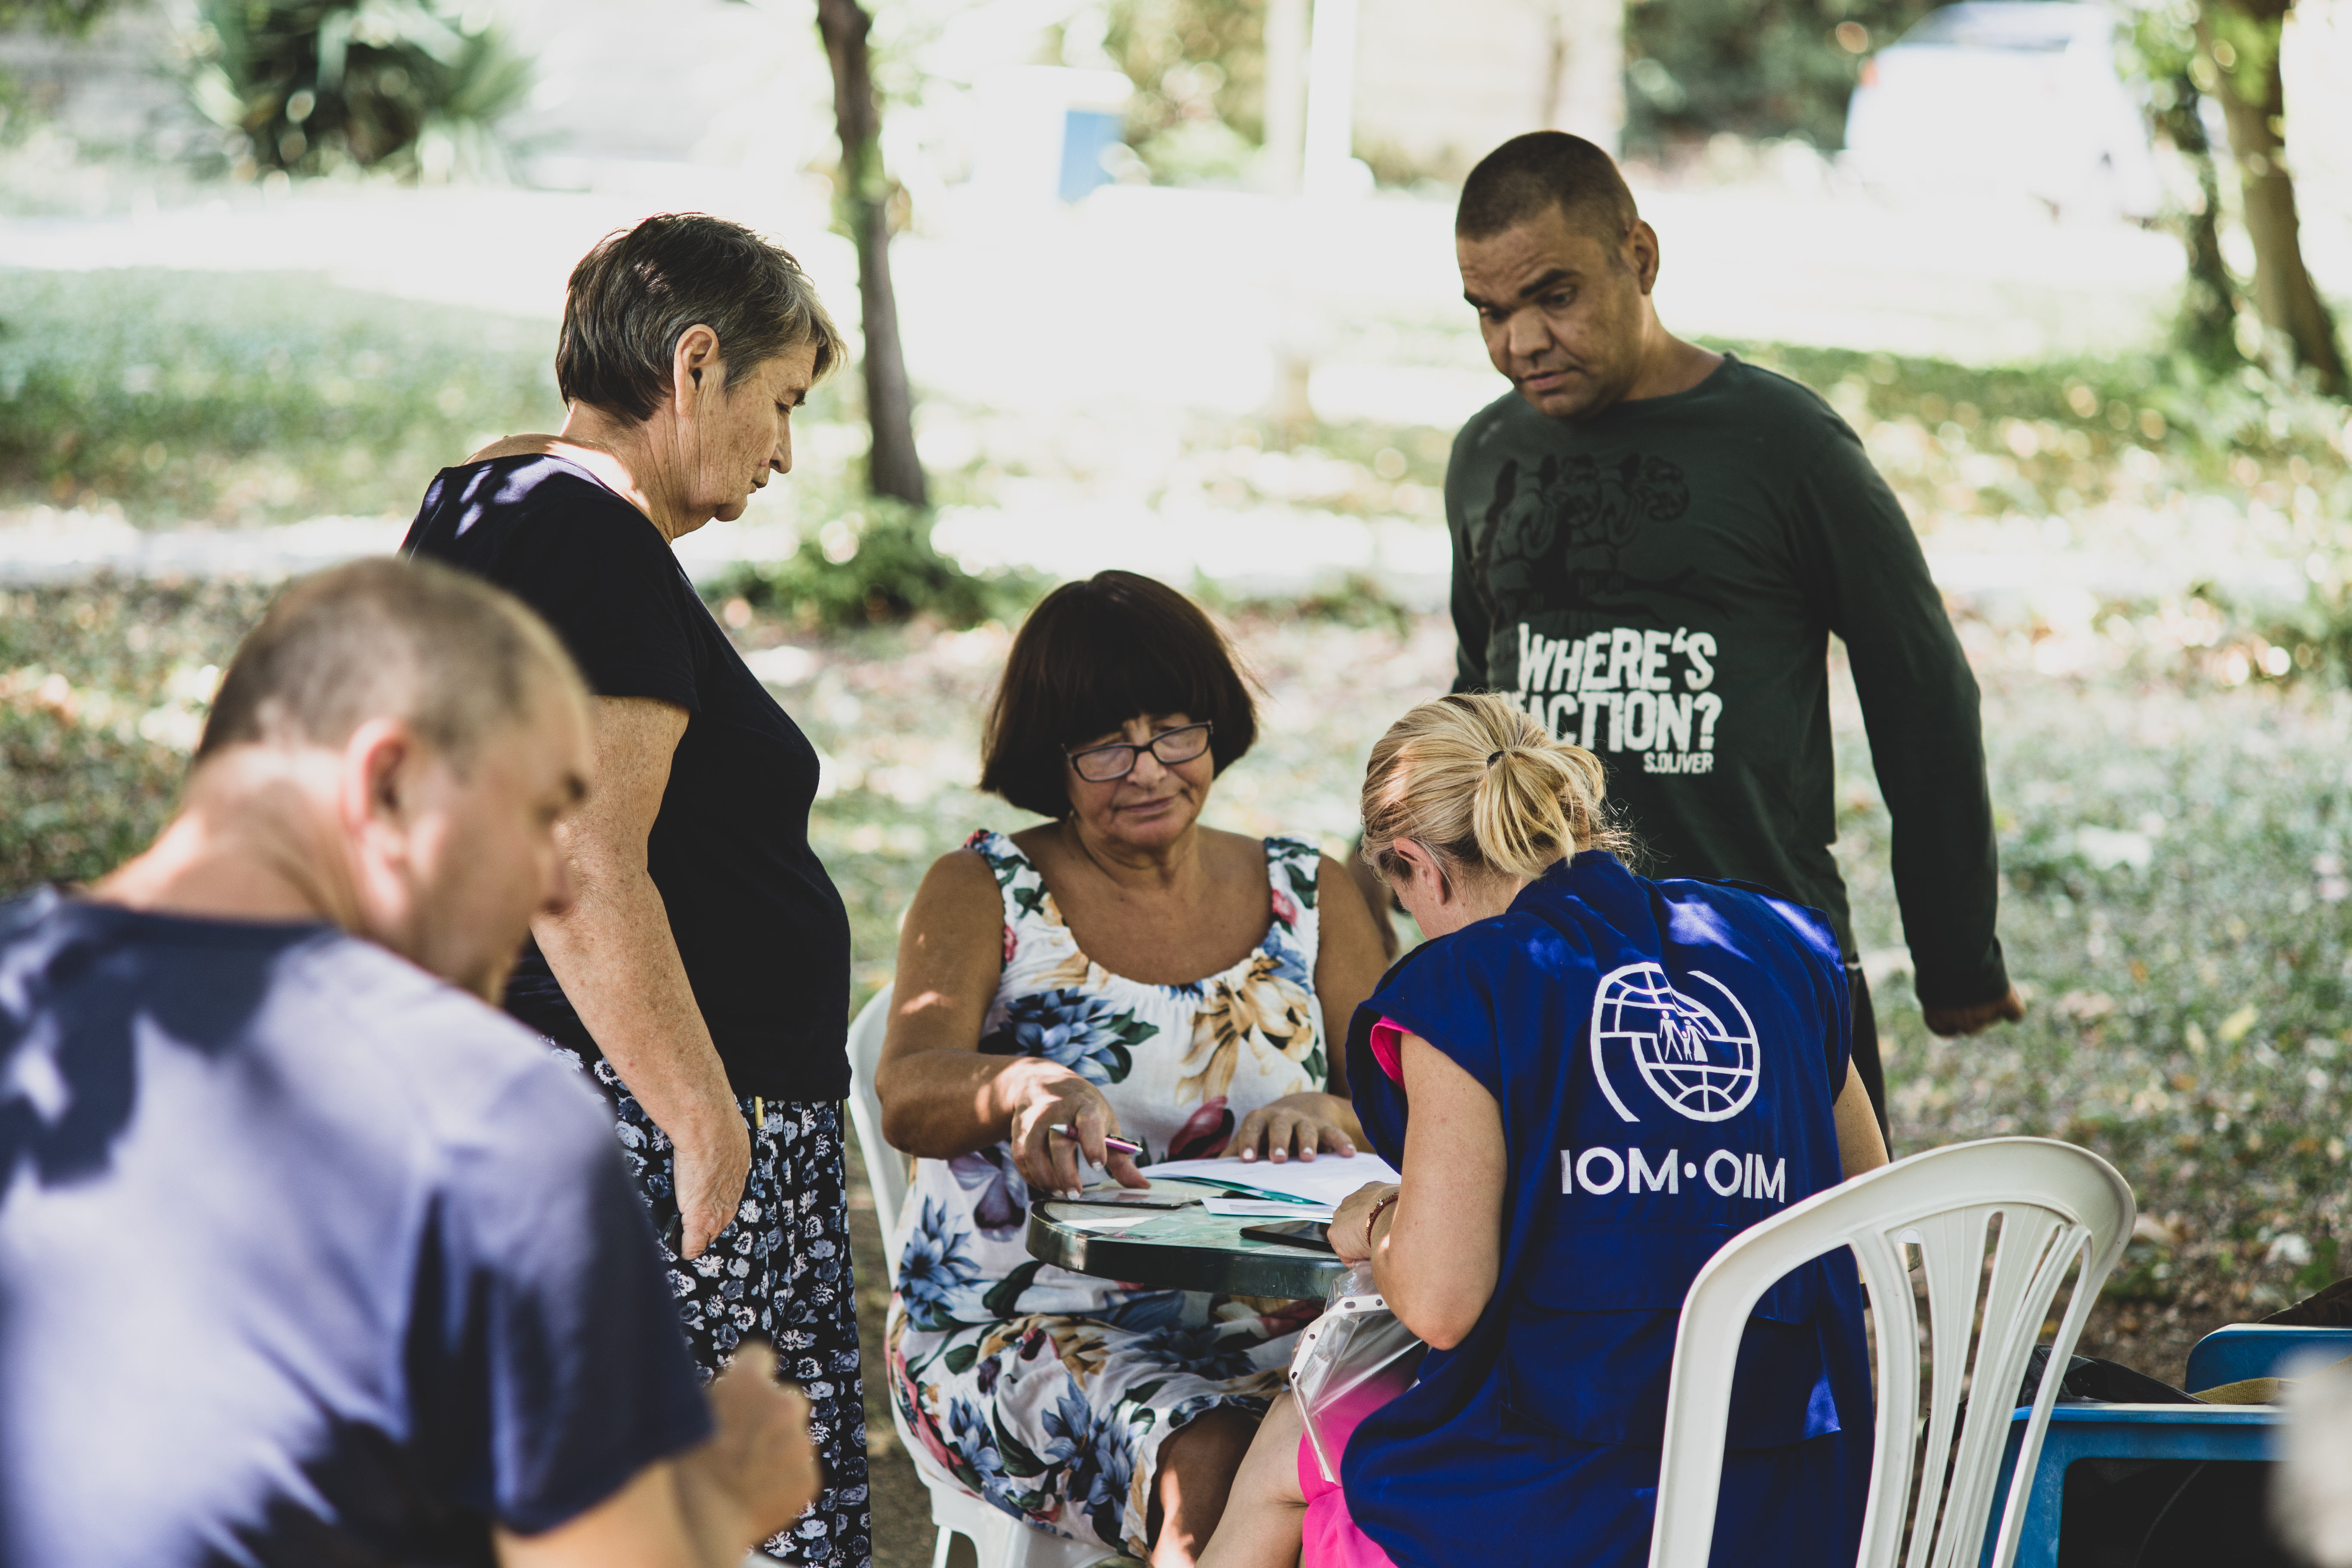 IOM staff assisting vulnerable individuals in Varna region